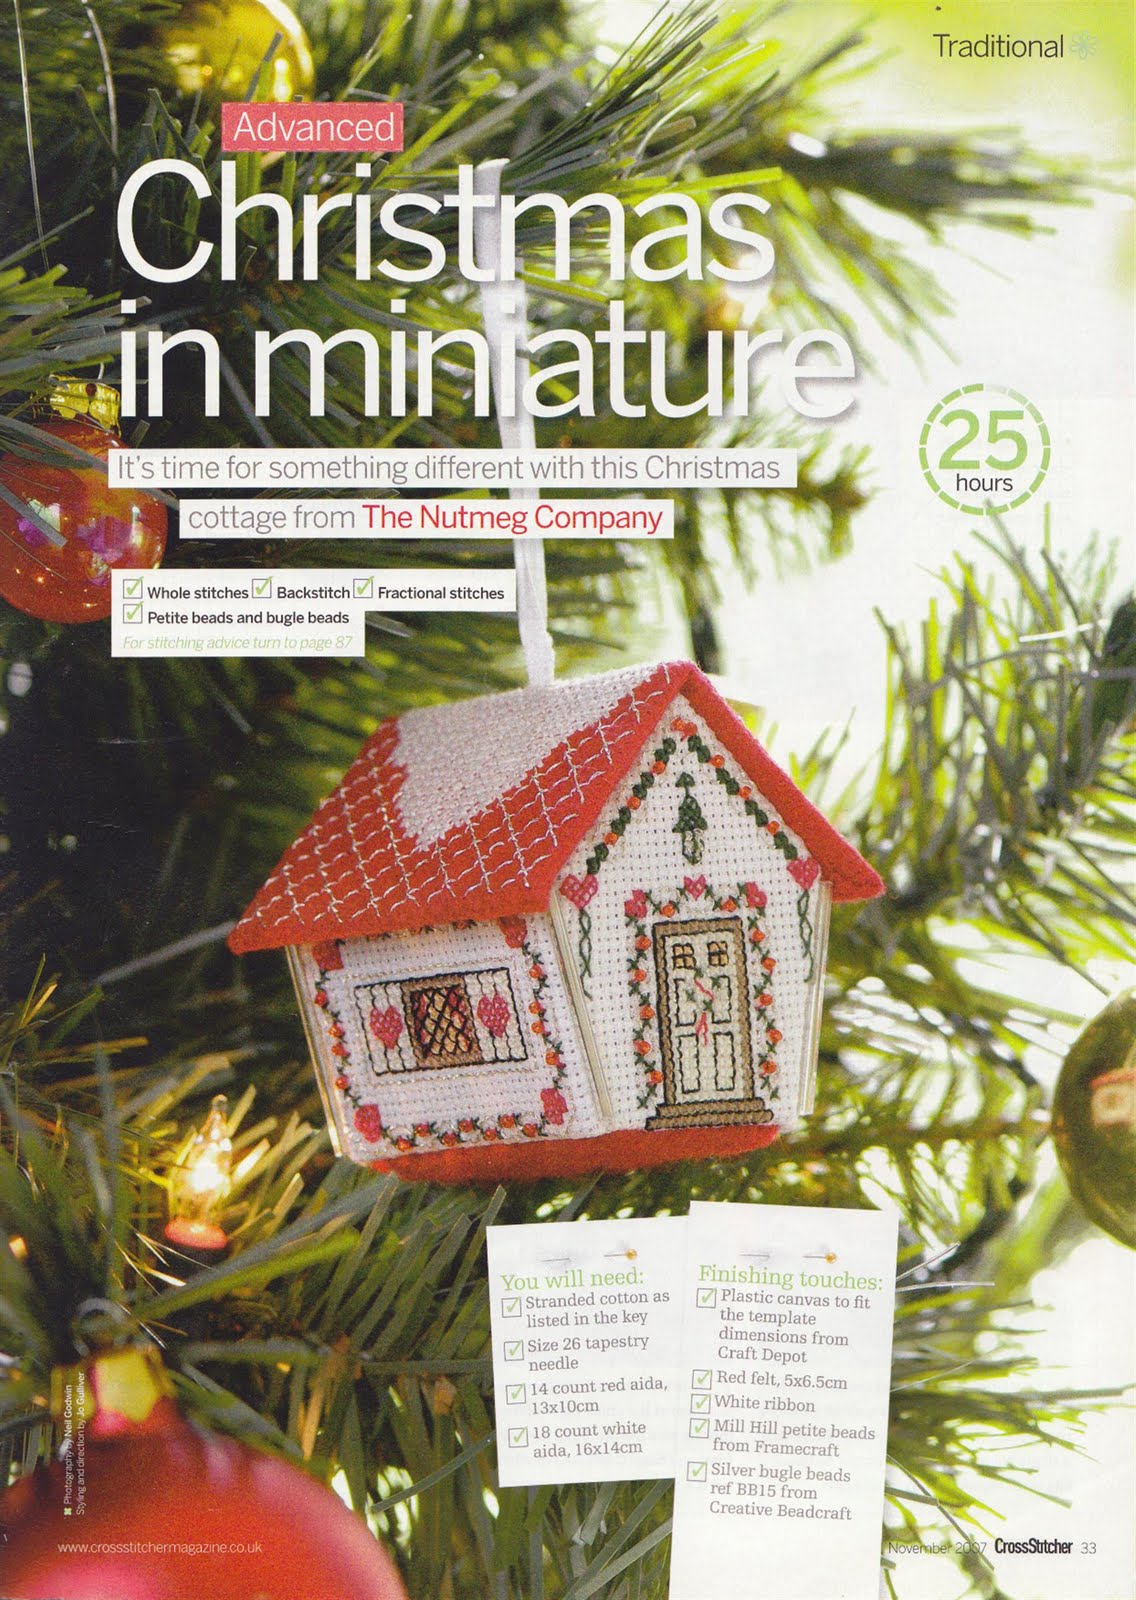 natty's cross stitch corner: Christmas Cottage Ornament